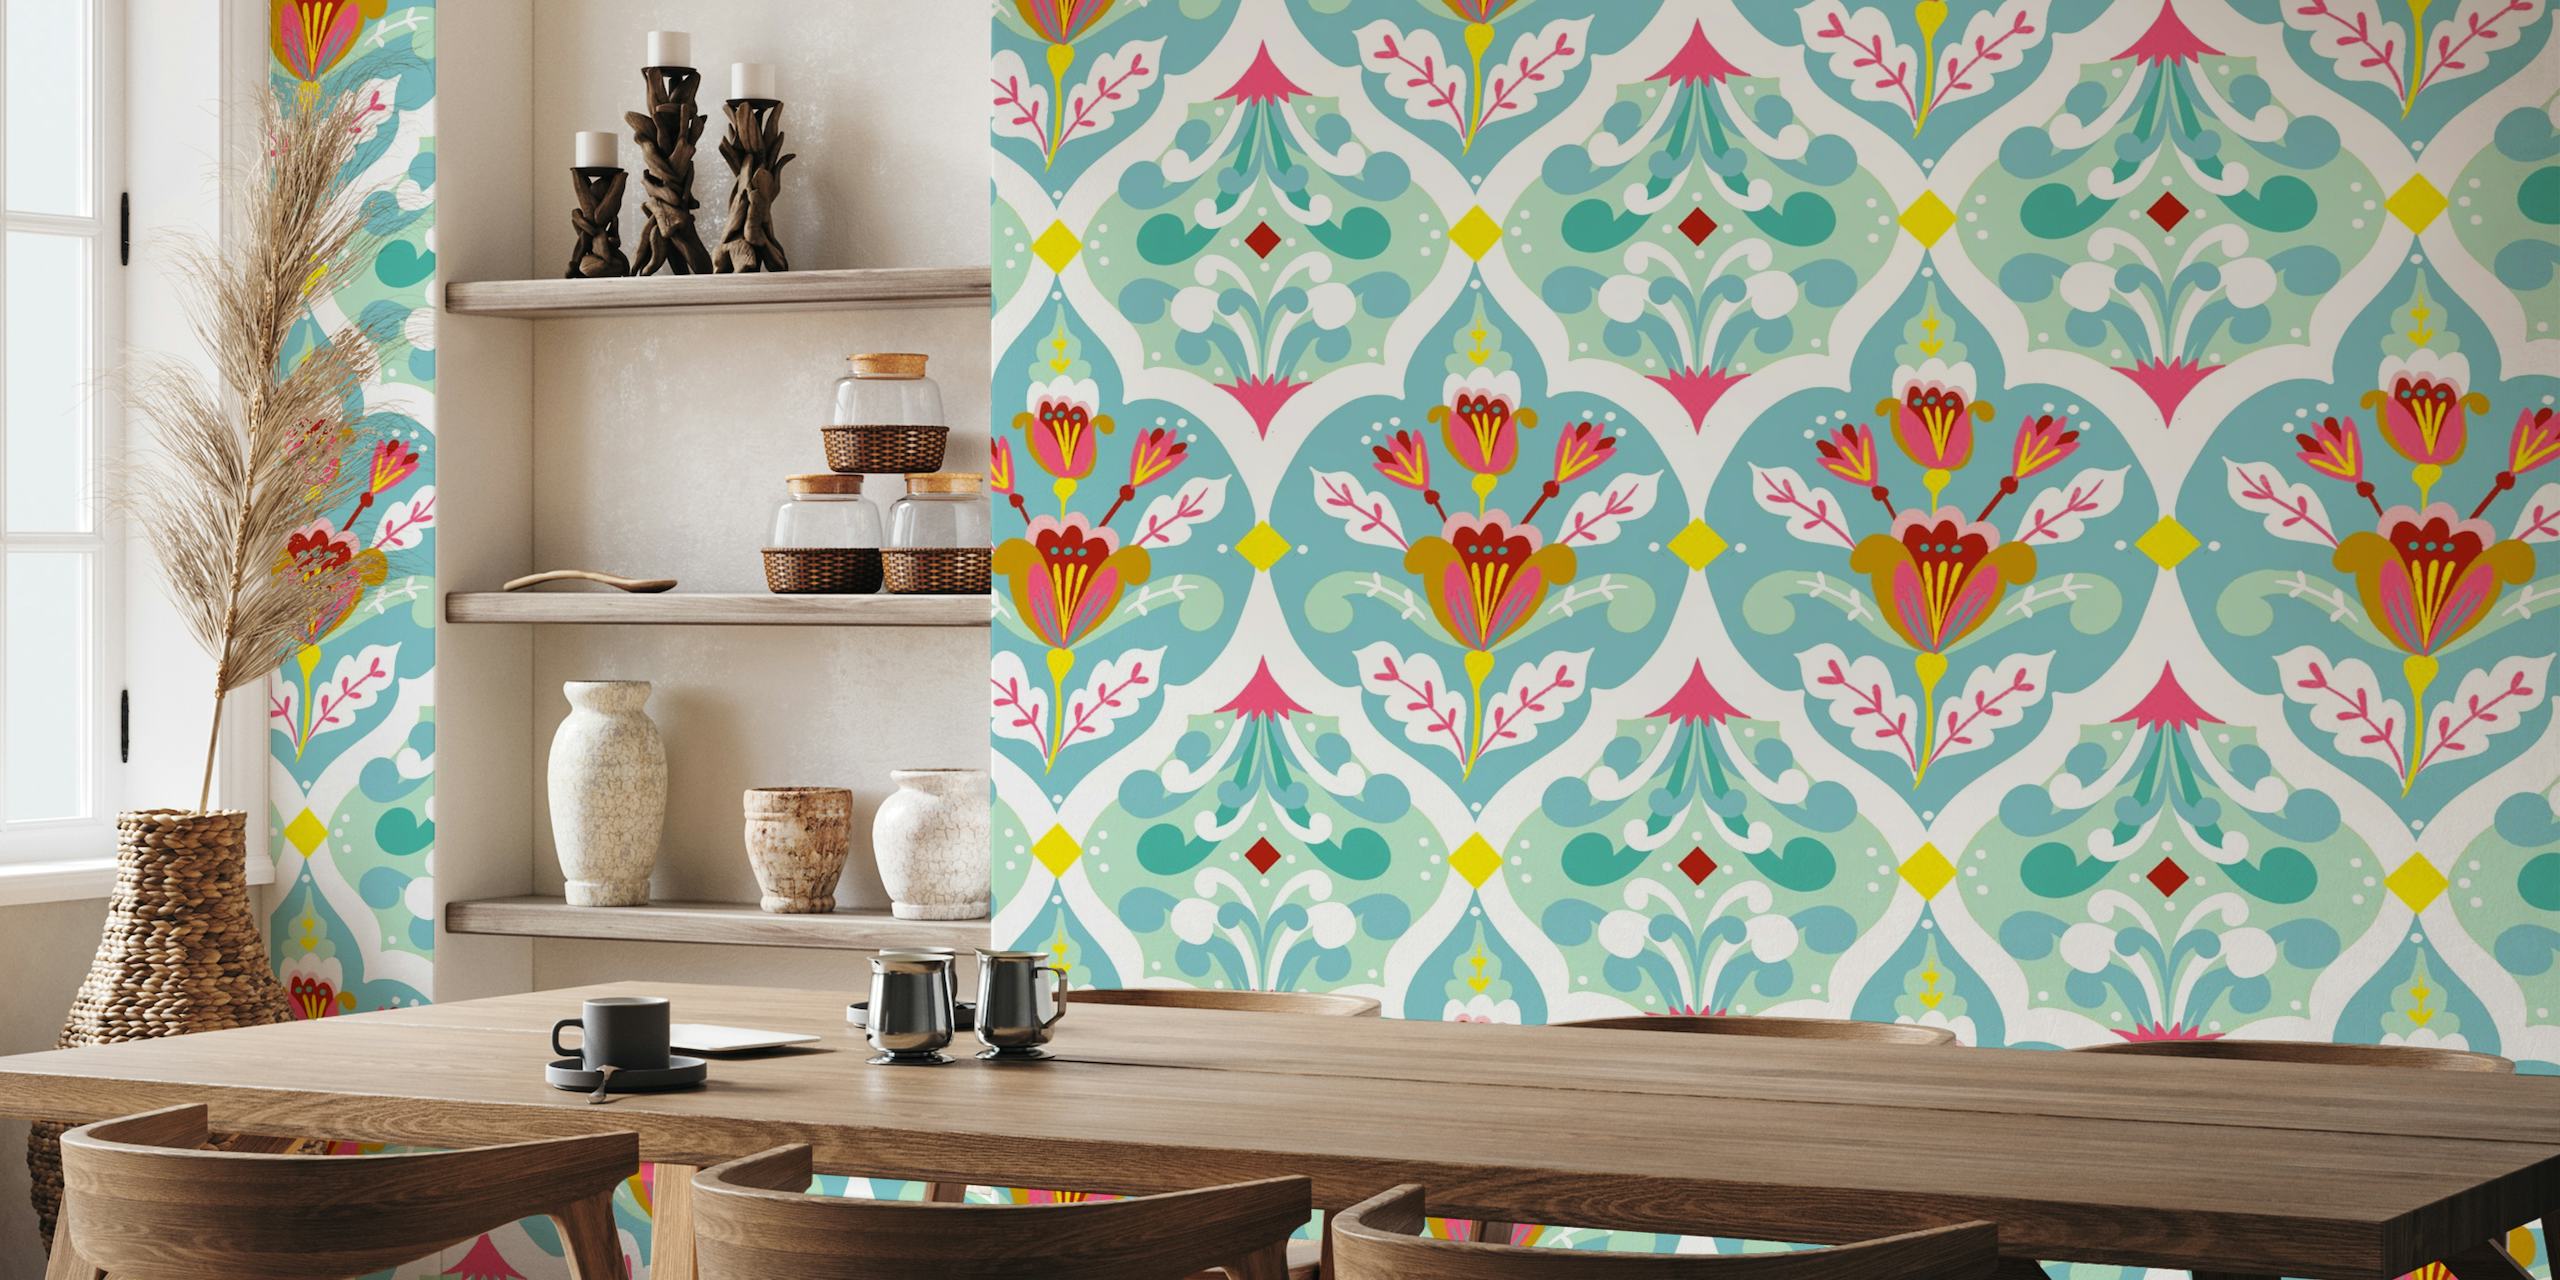 Elegante mural de pared floral damasco en tonos menta con vibrantes detalles florales